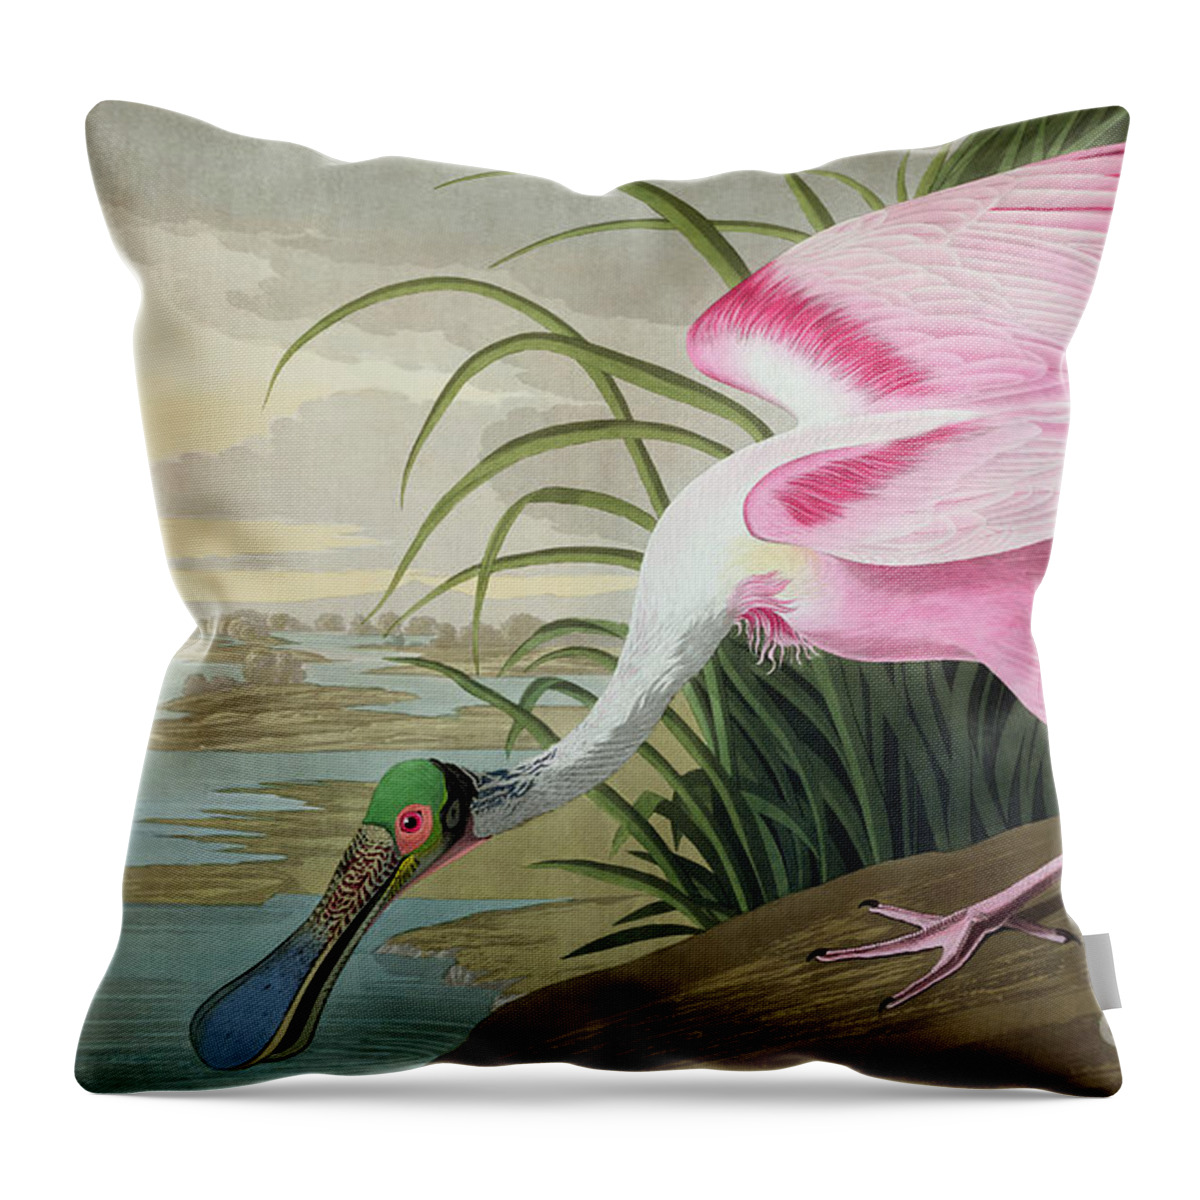 Audubon Throw Pillow featuring the painting Roseate Spoonbill by John James Audubon